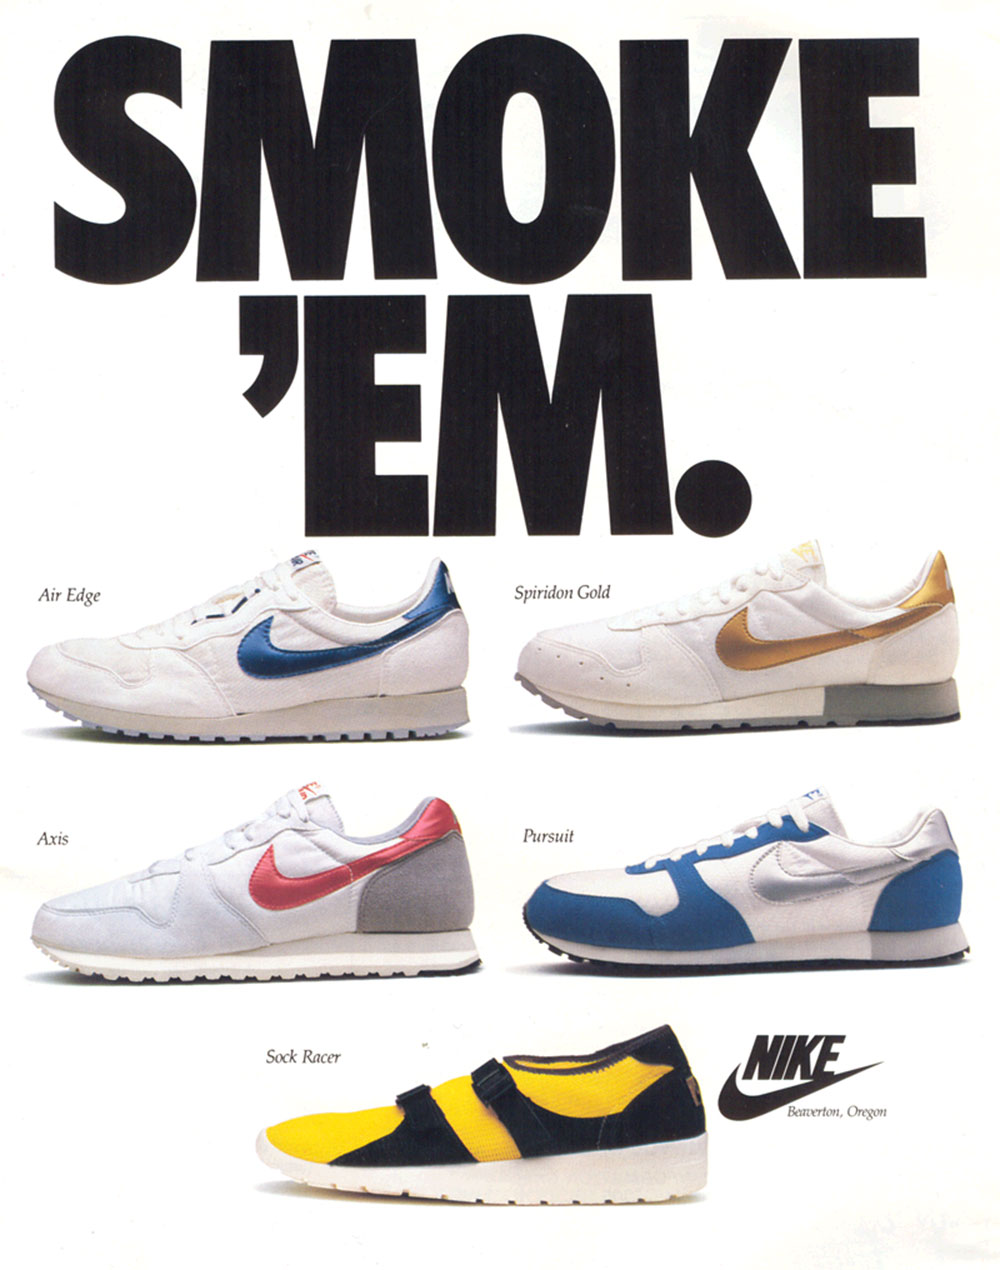 nike ads 1990s